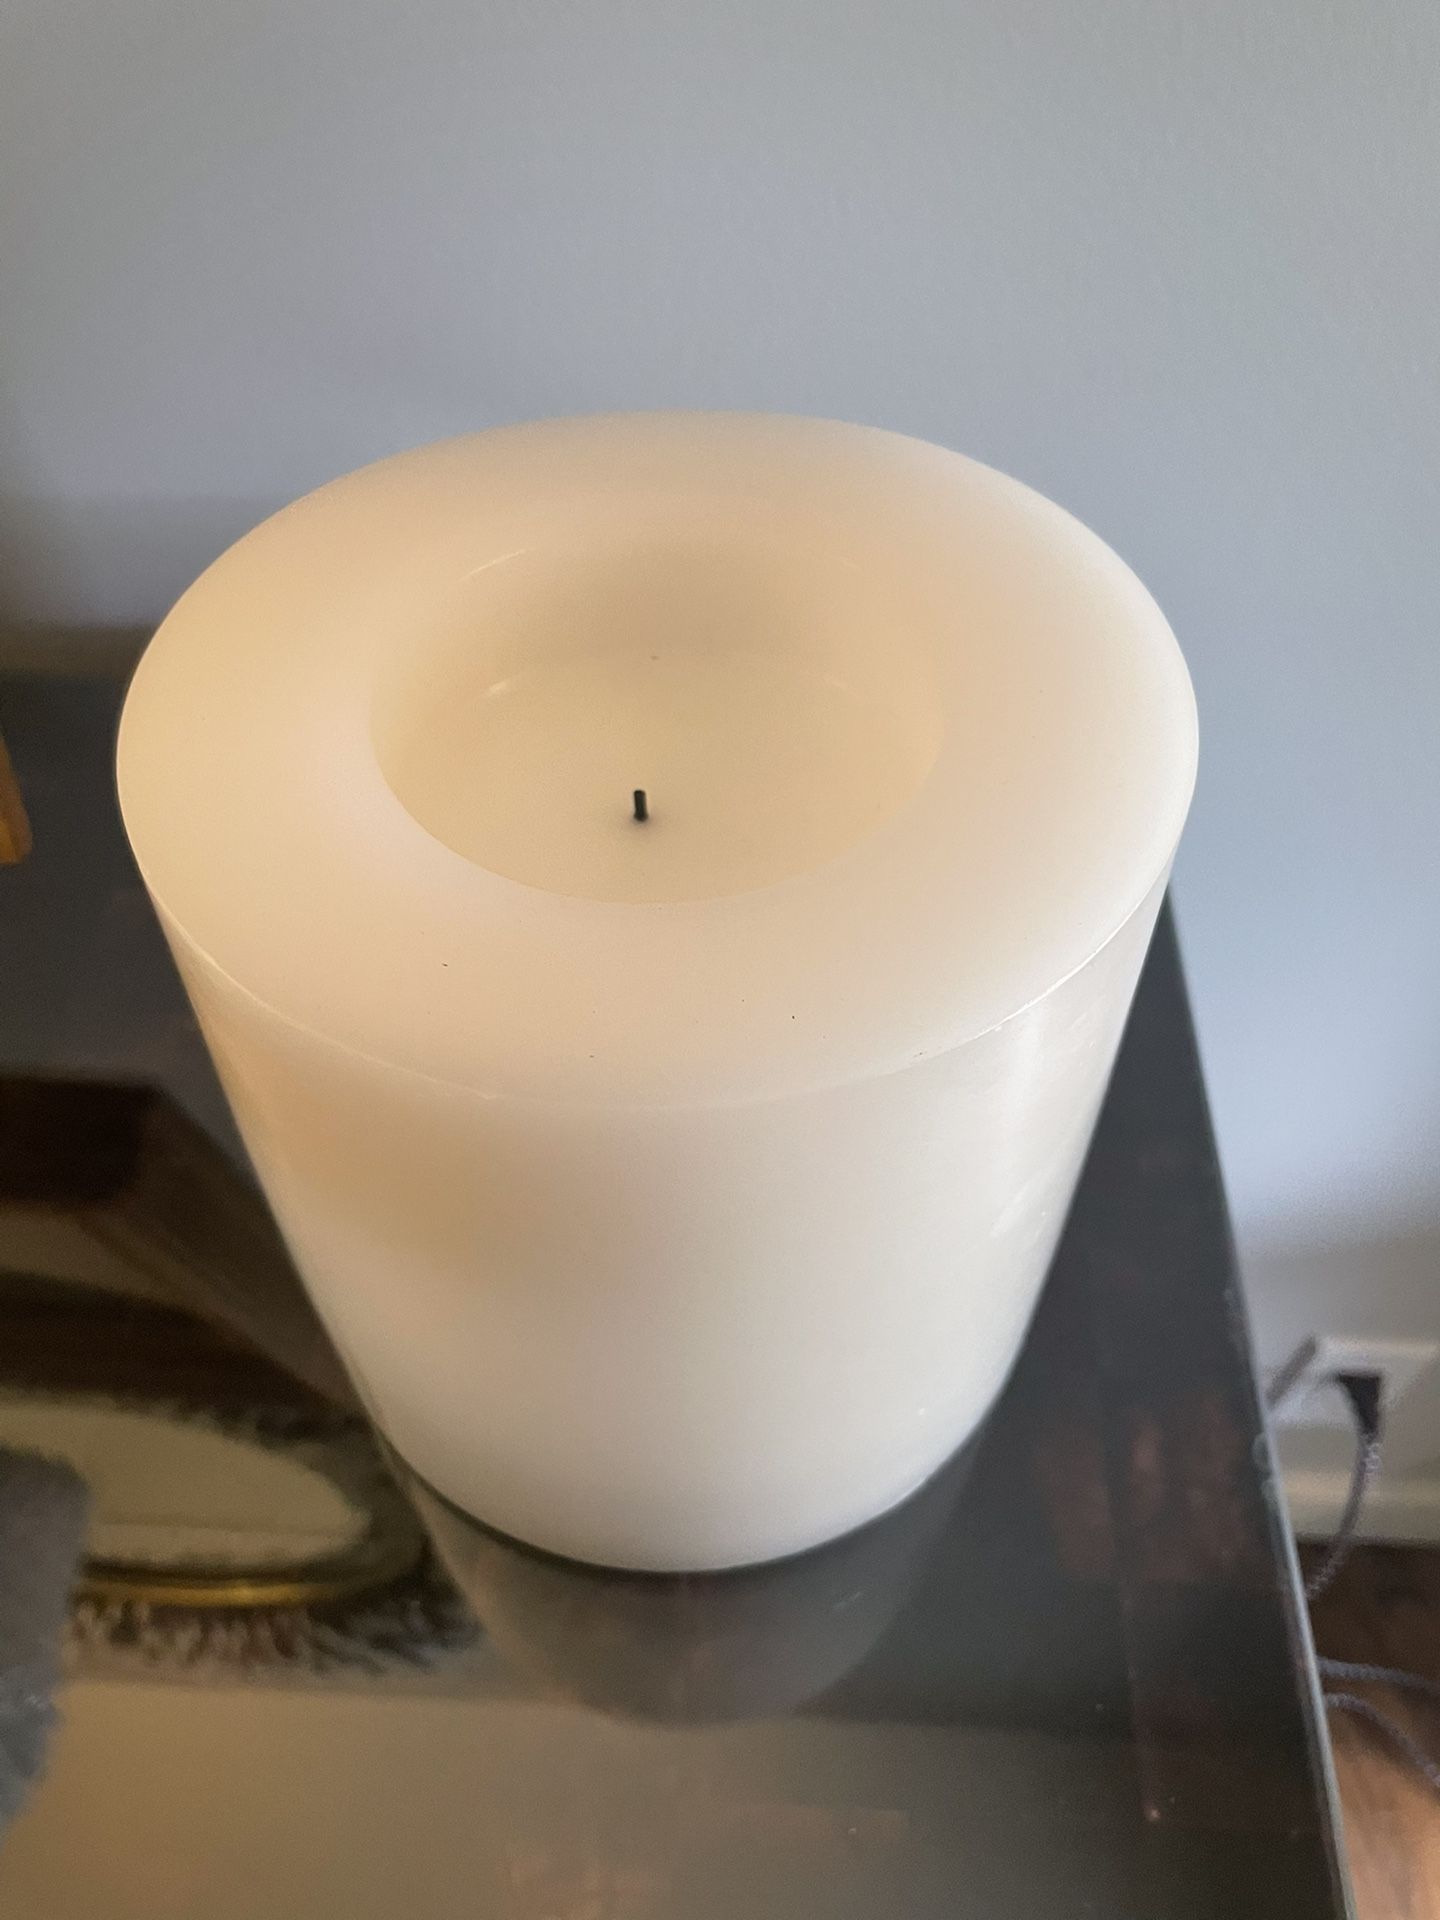 Pottery Barn -  Standard Flameless LED Pillar Candle - Ivory